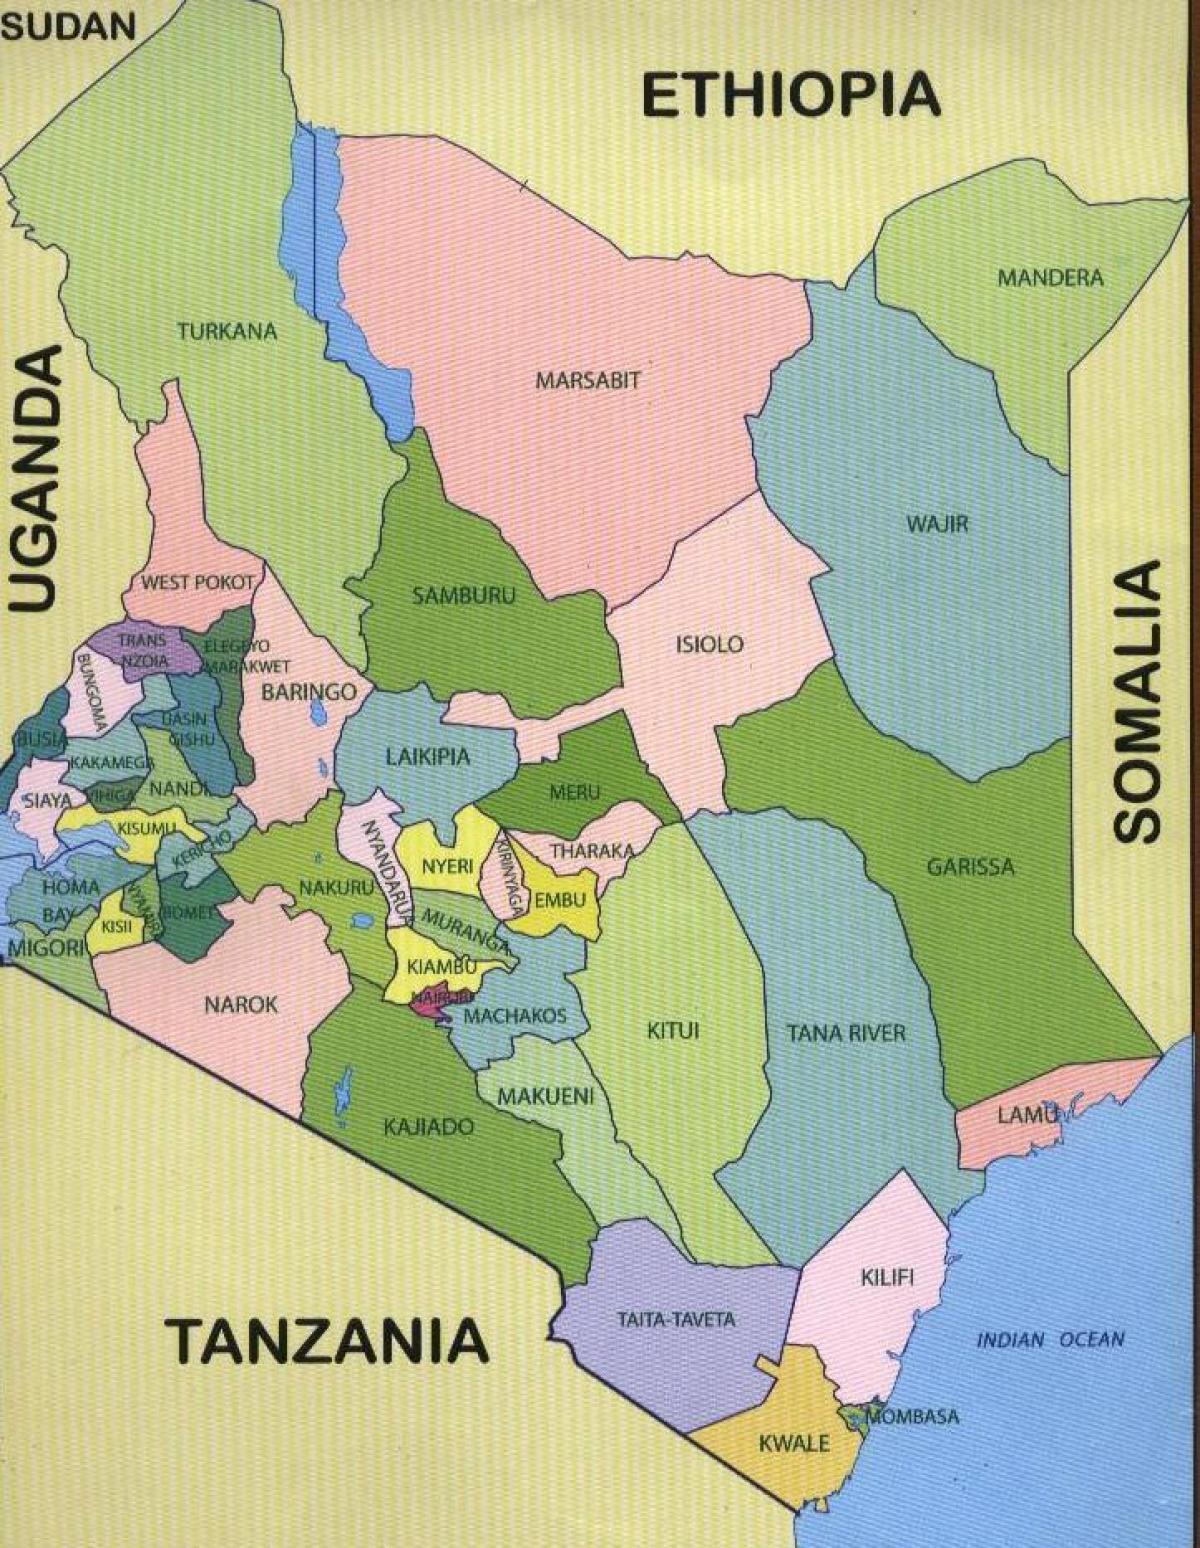 nou mapa de Kenya comarques